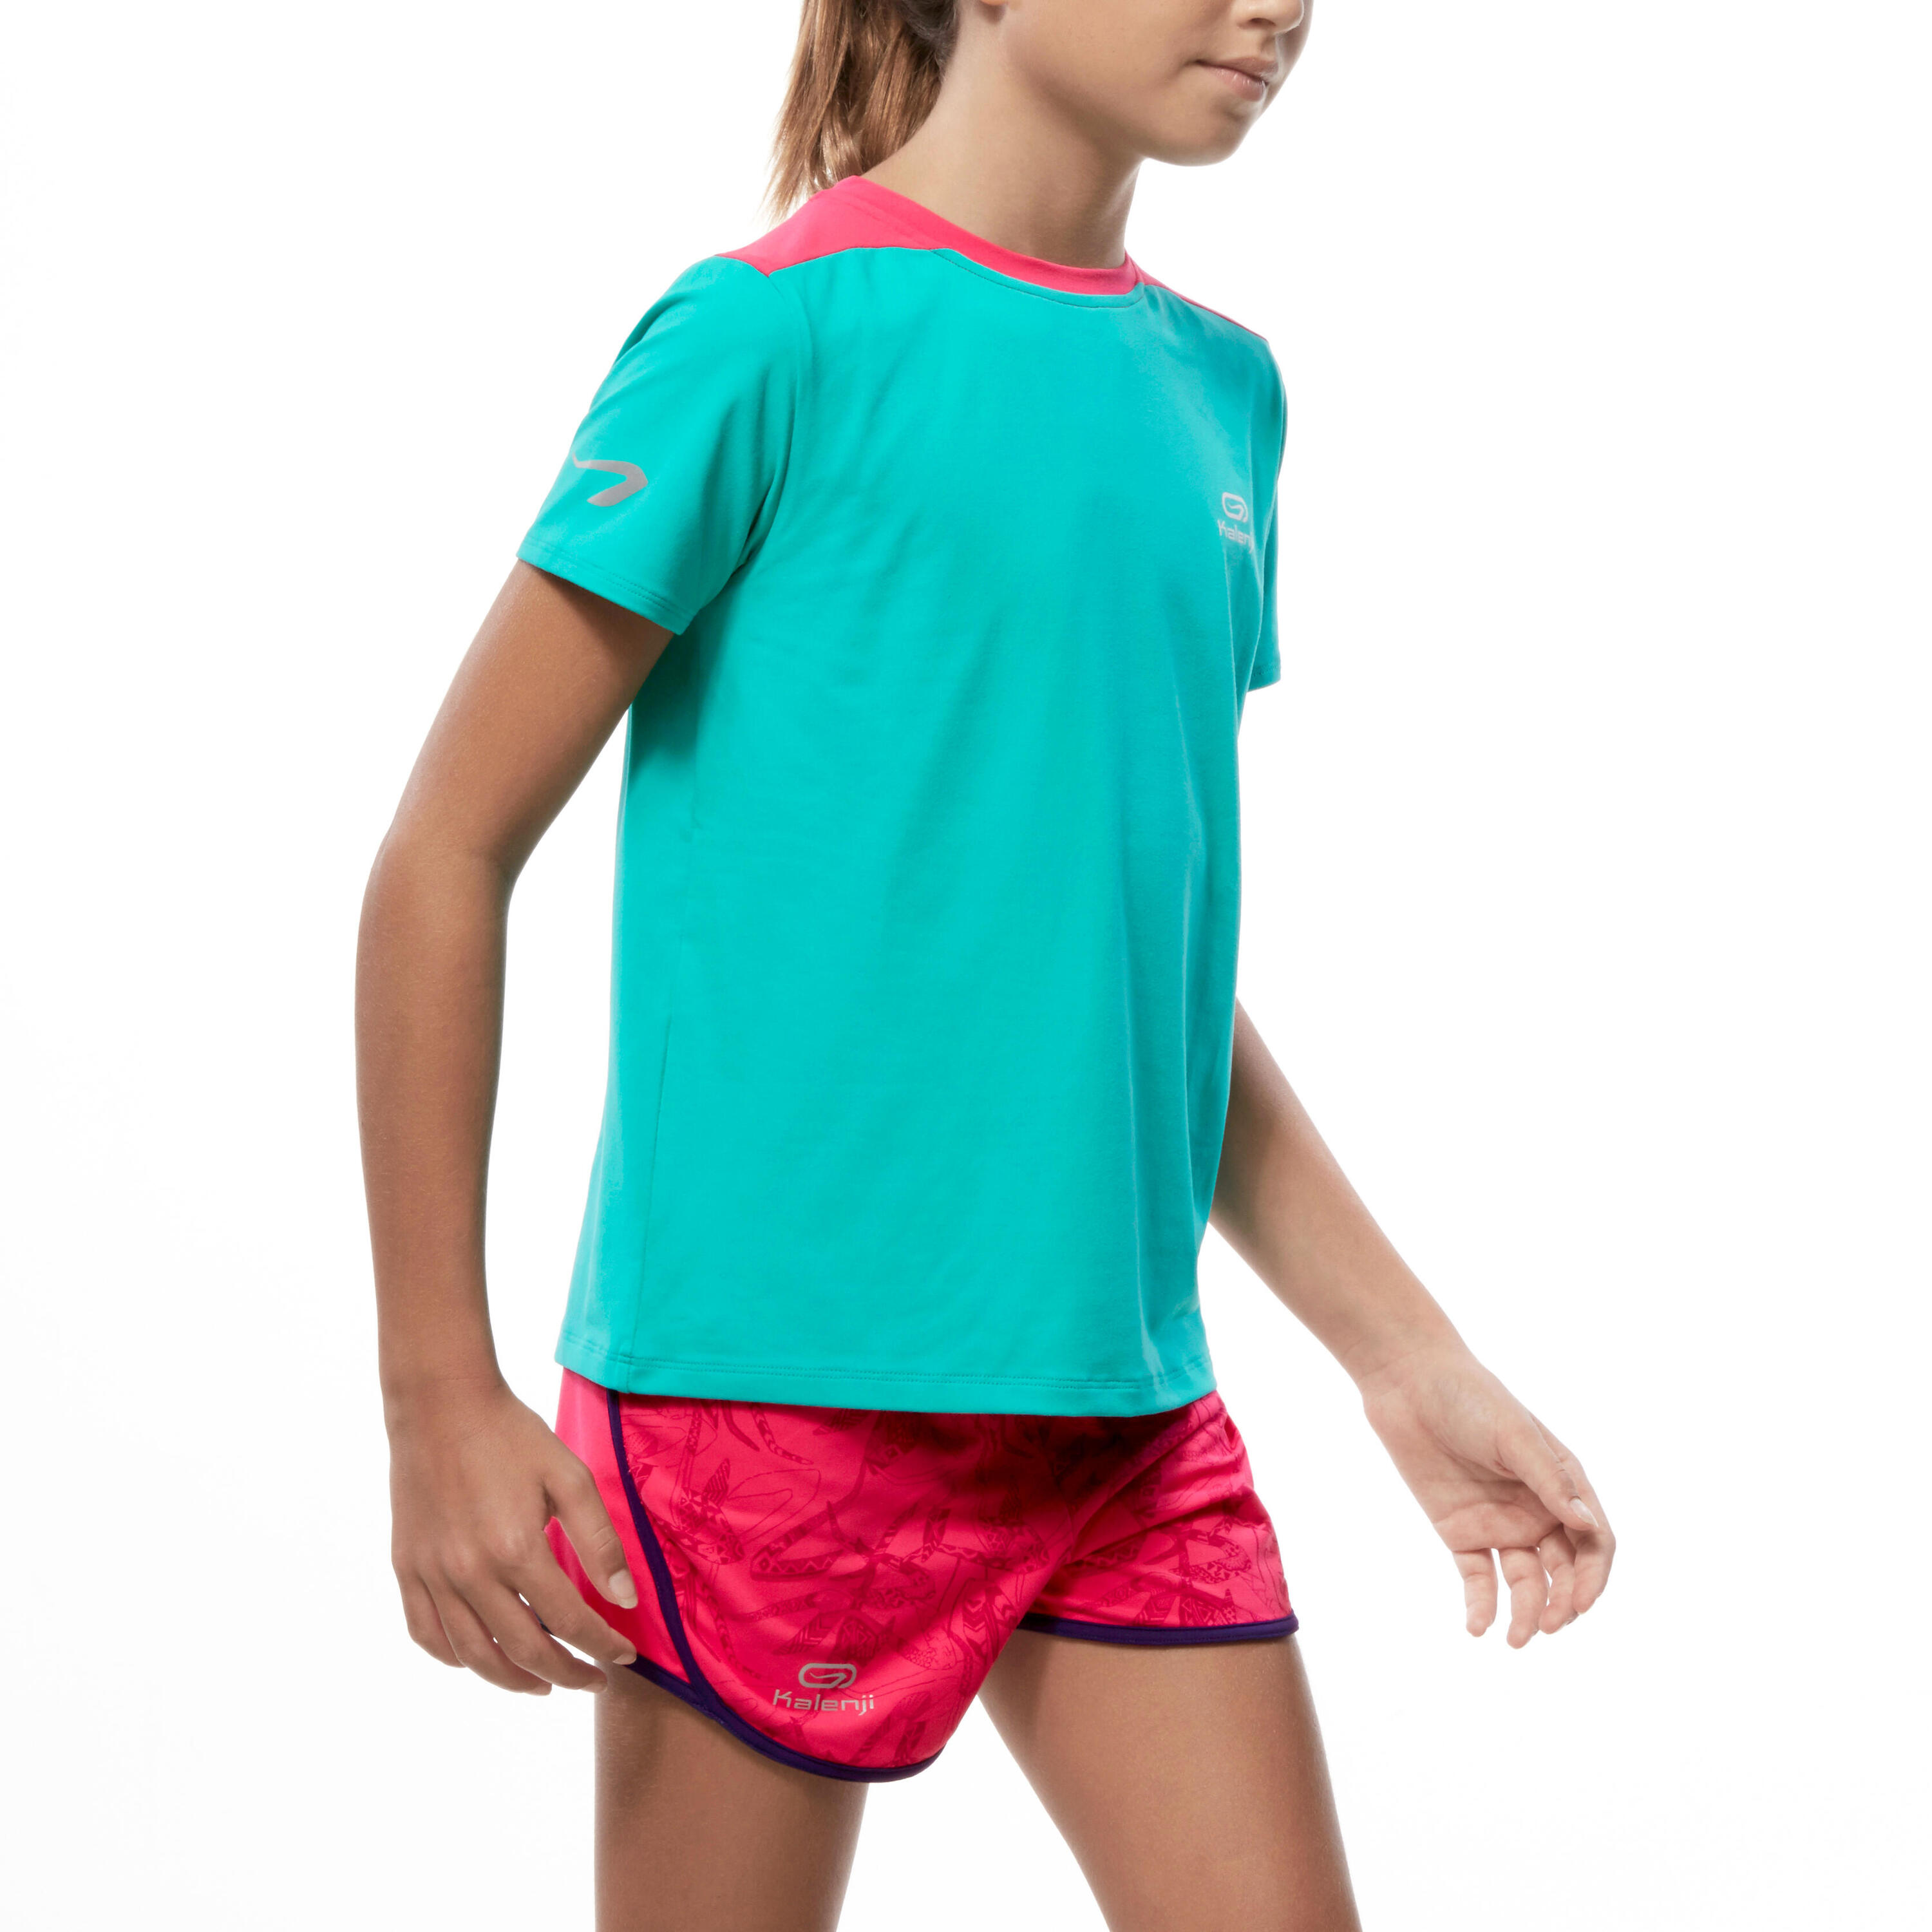 Eliofeel Children's Running TS Green Pink 3/14